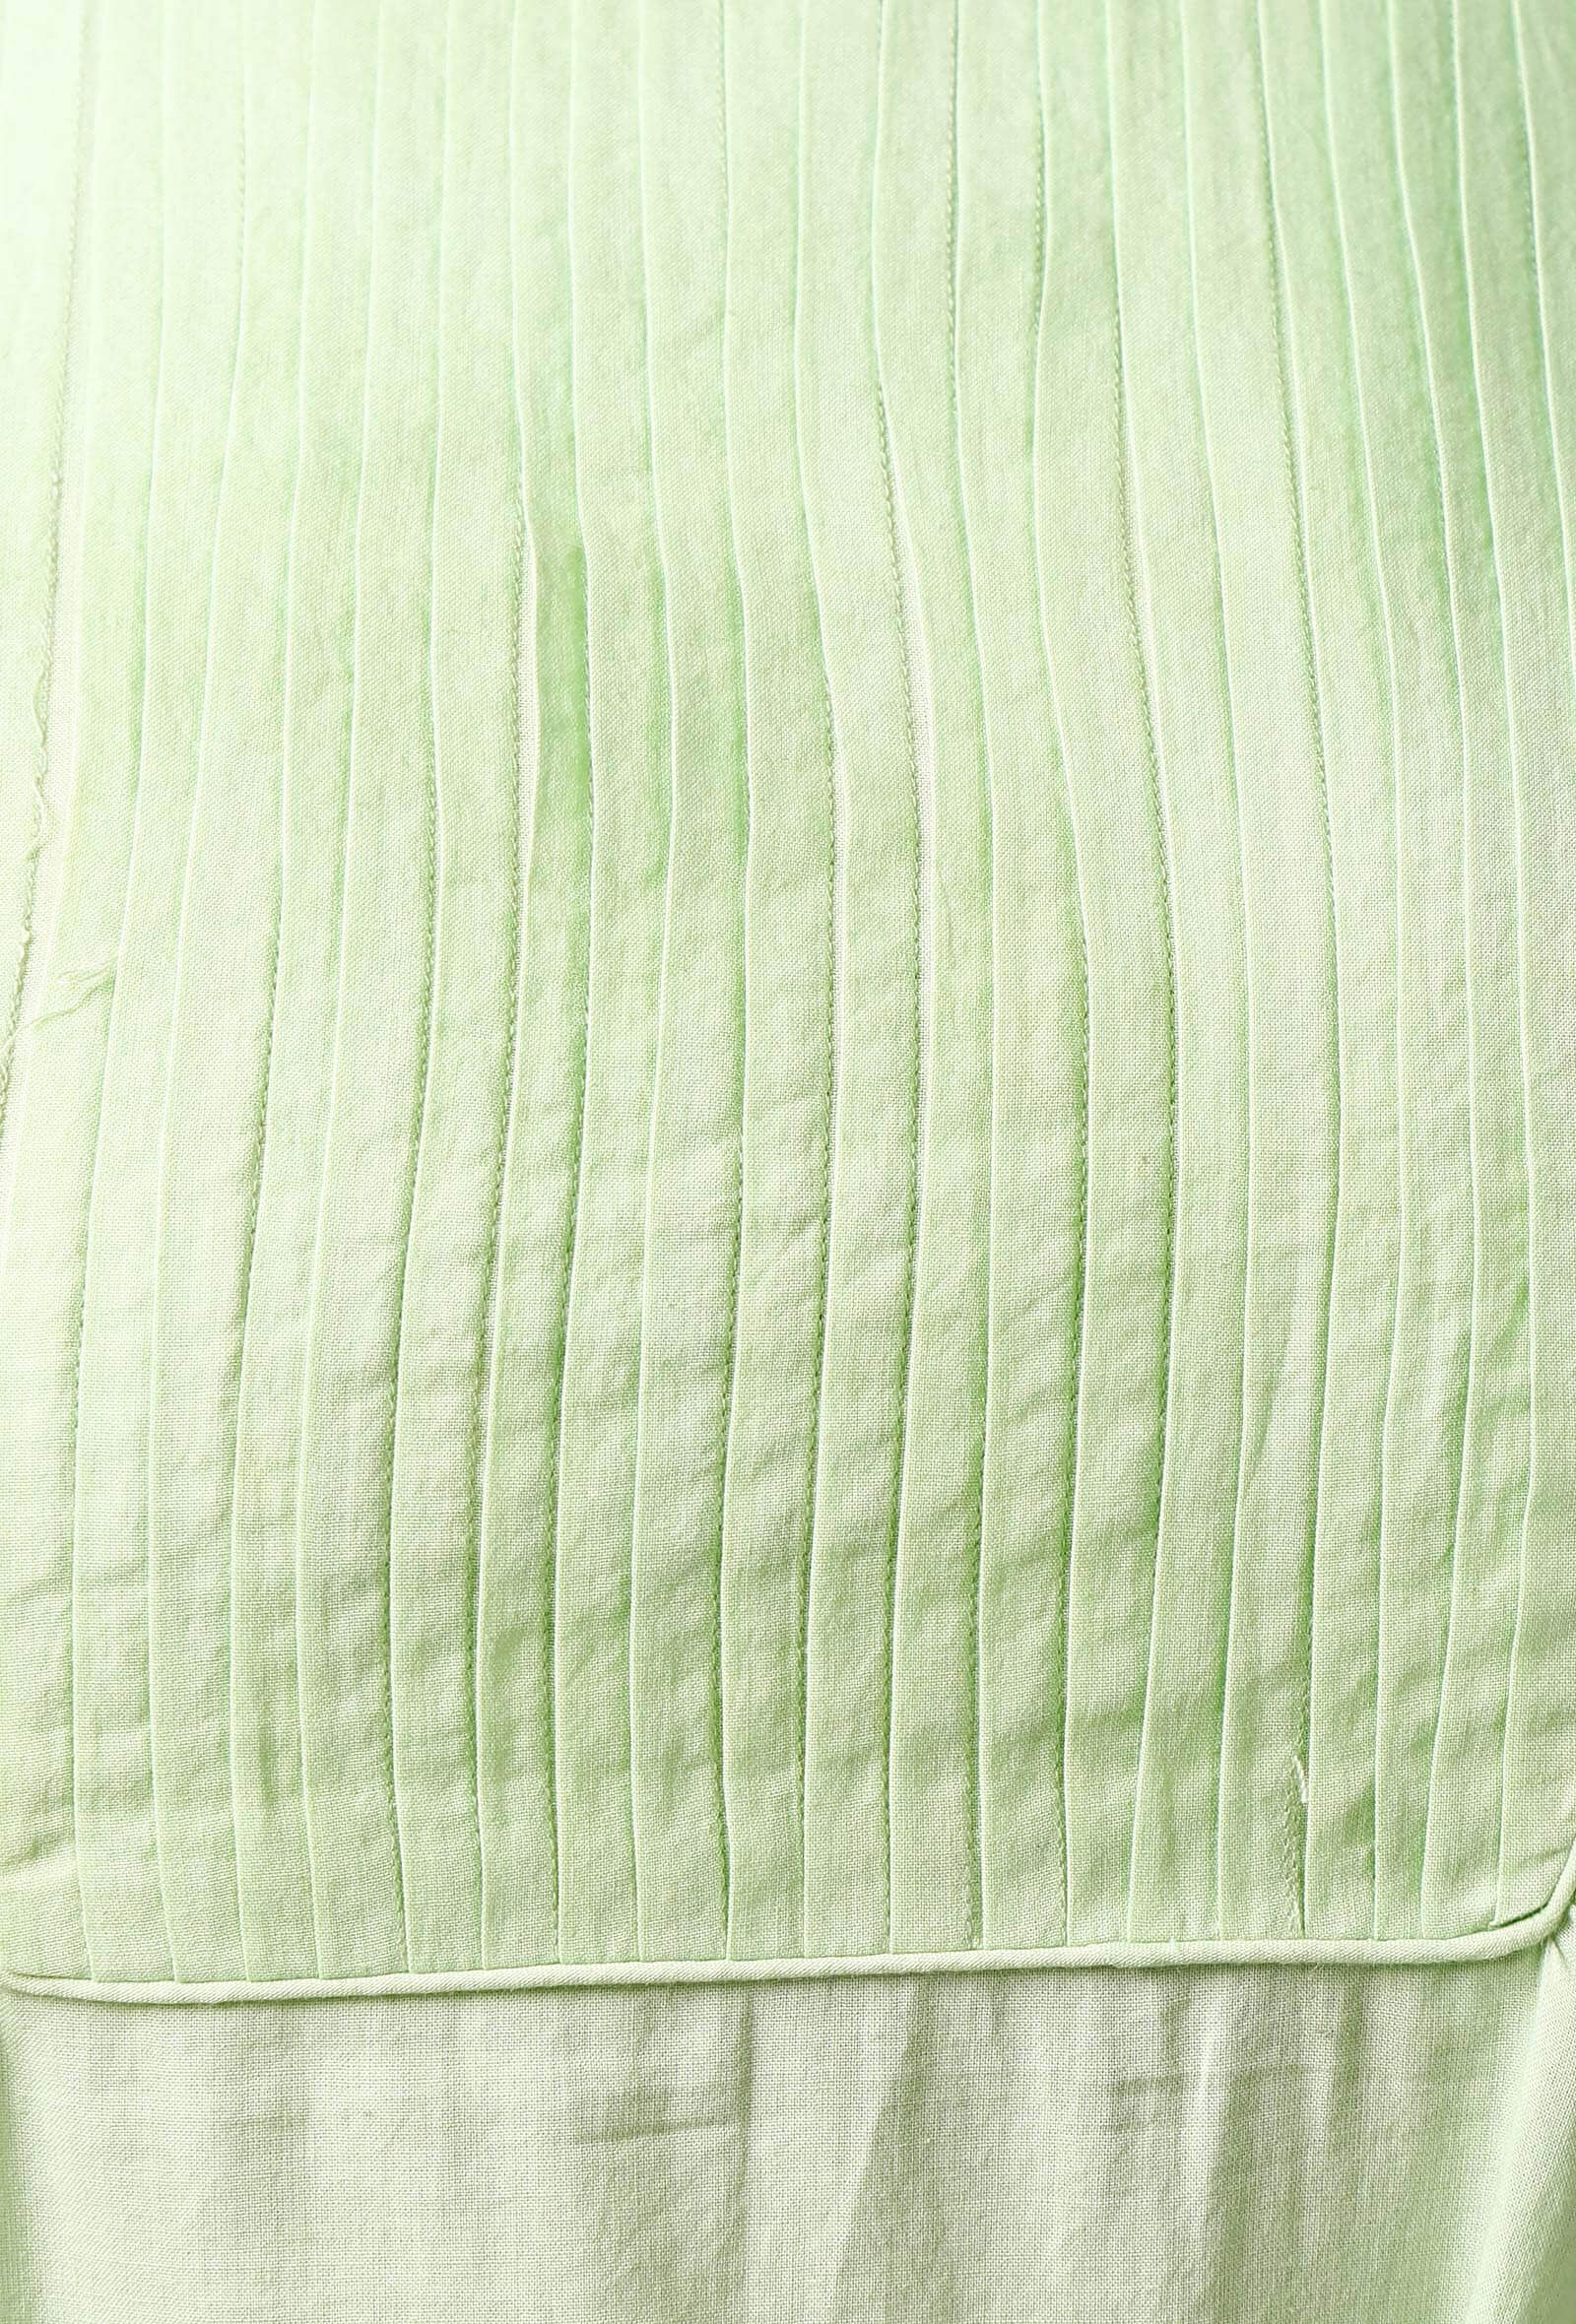 The Easy Going Light Green Cotton Kurta